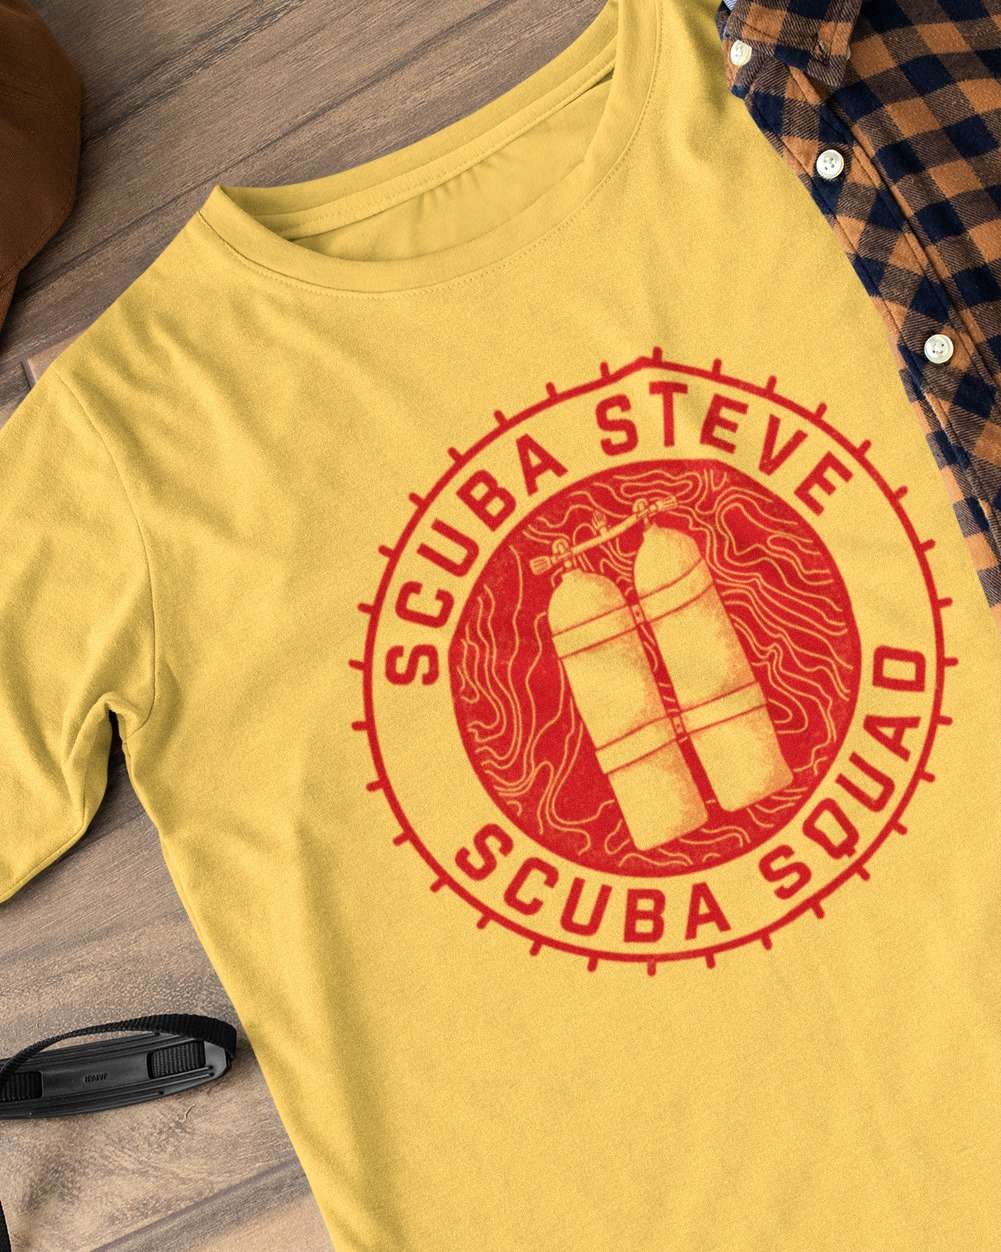 Scuba Steve Scuba squad - Scuba diving lover